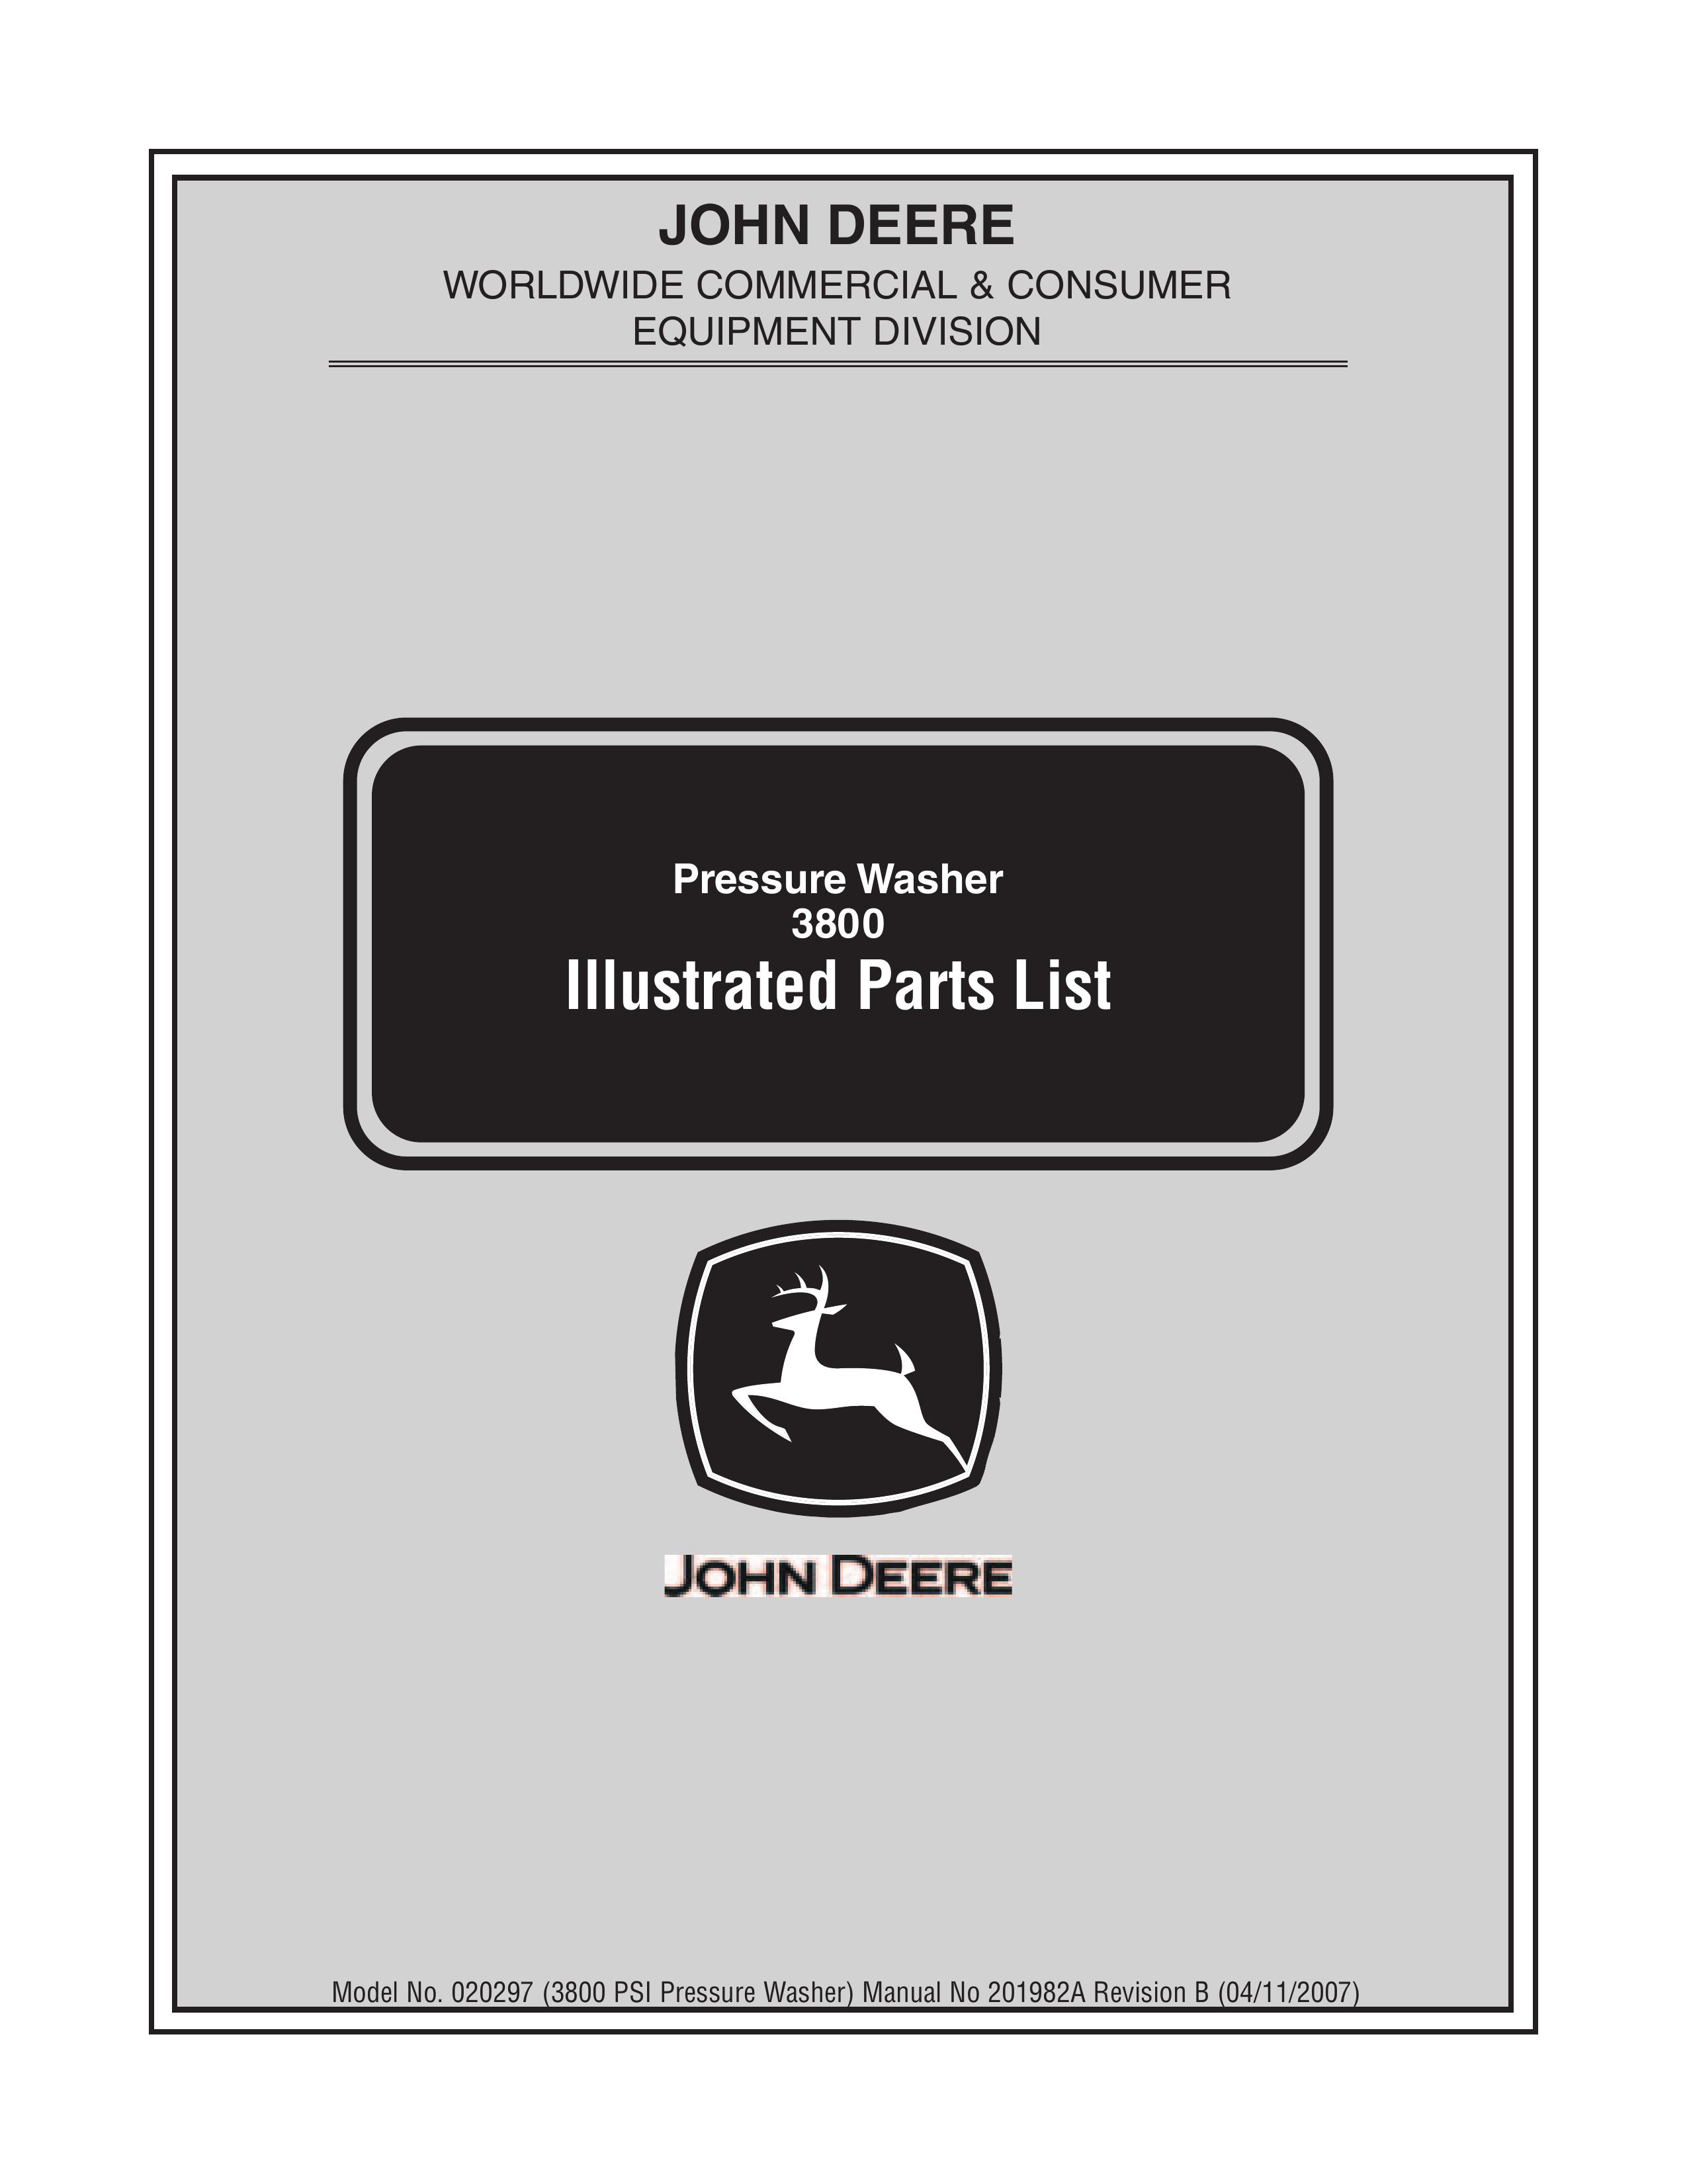 John Deere john deere pressure washer Pressure Washer User Manual